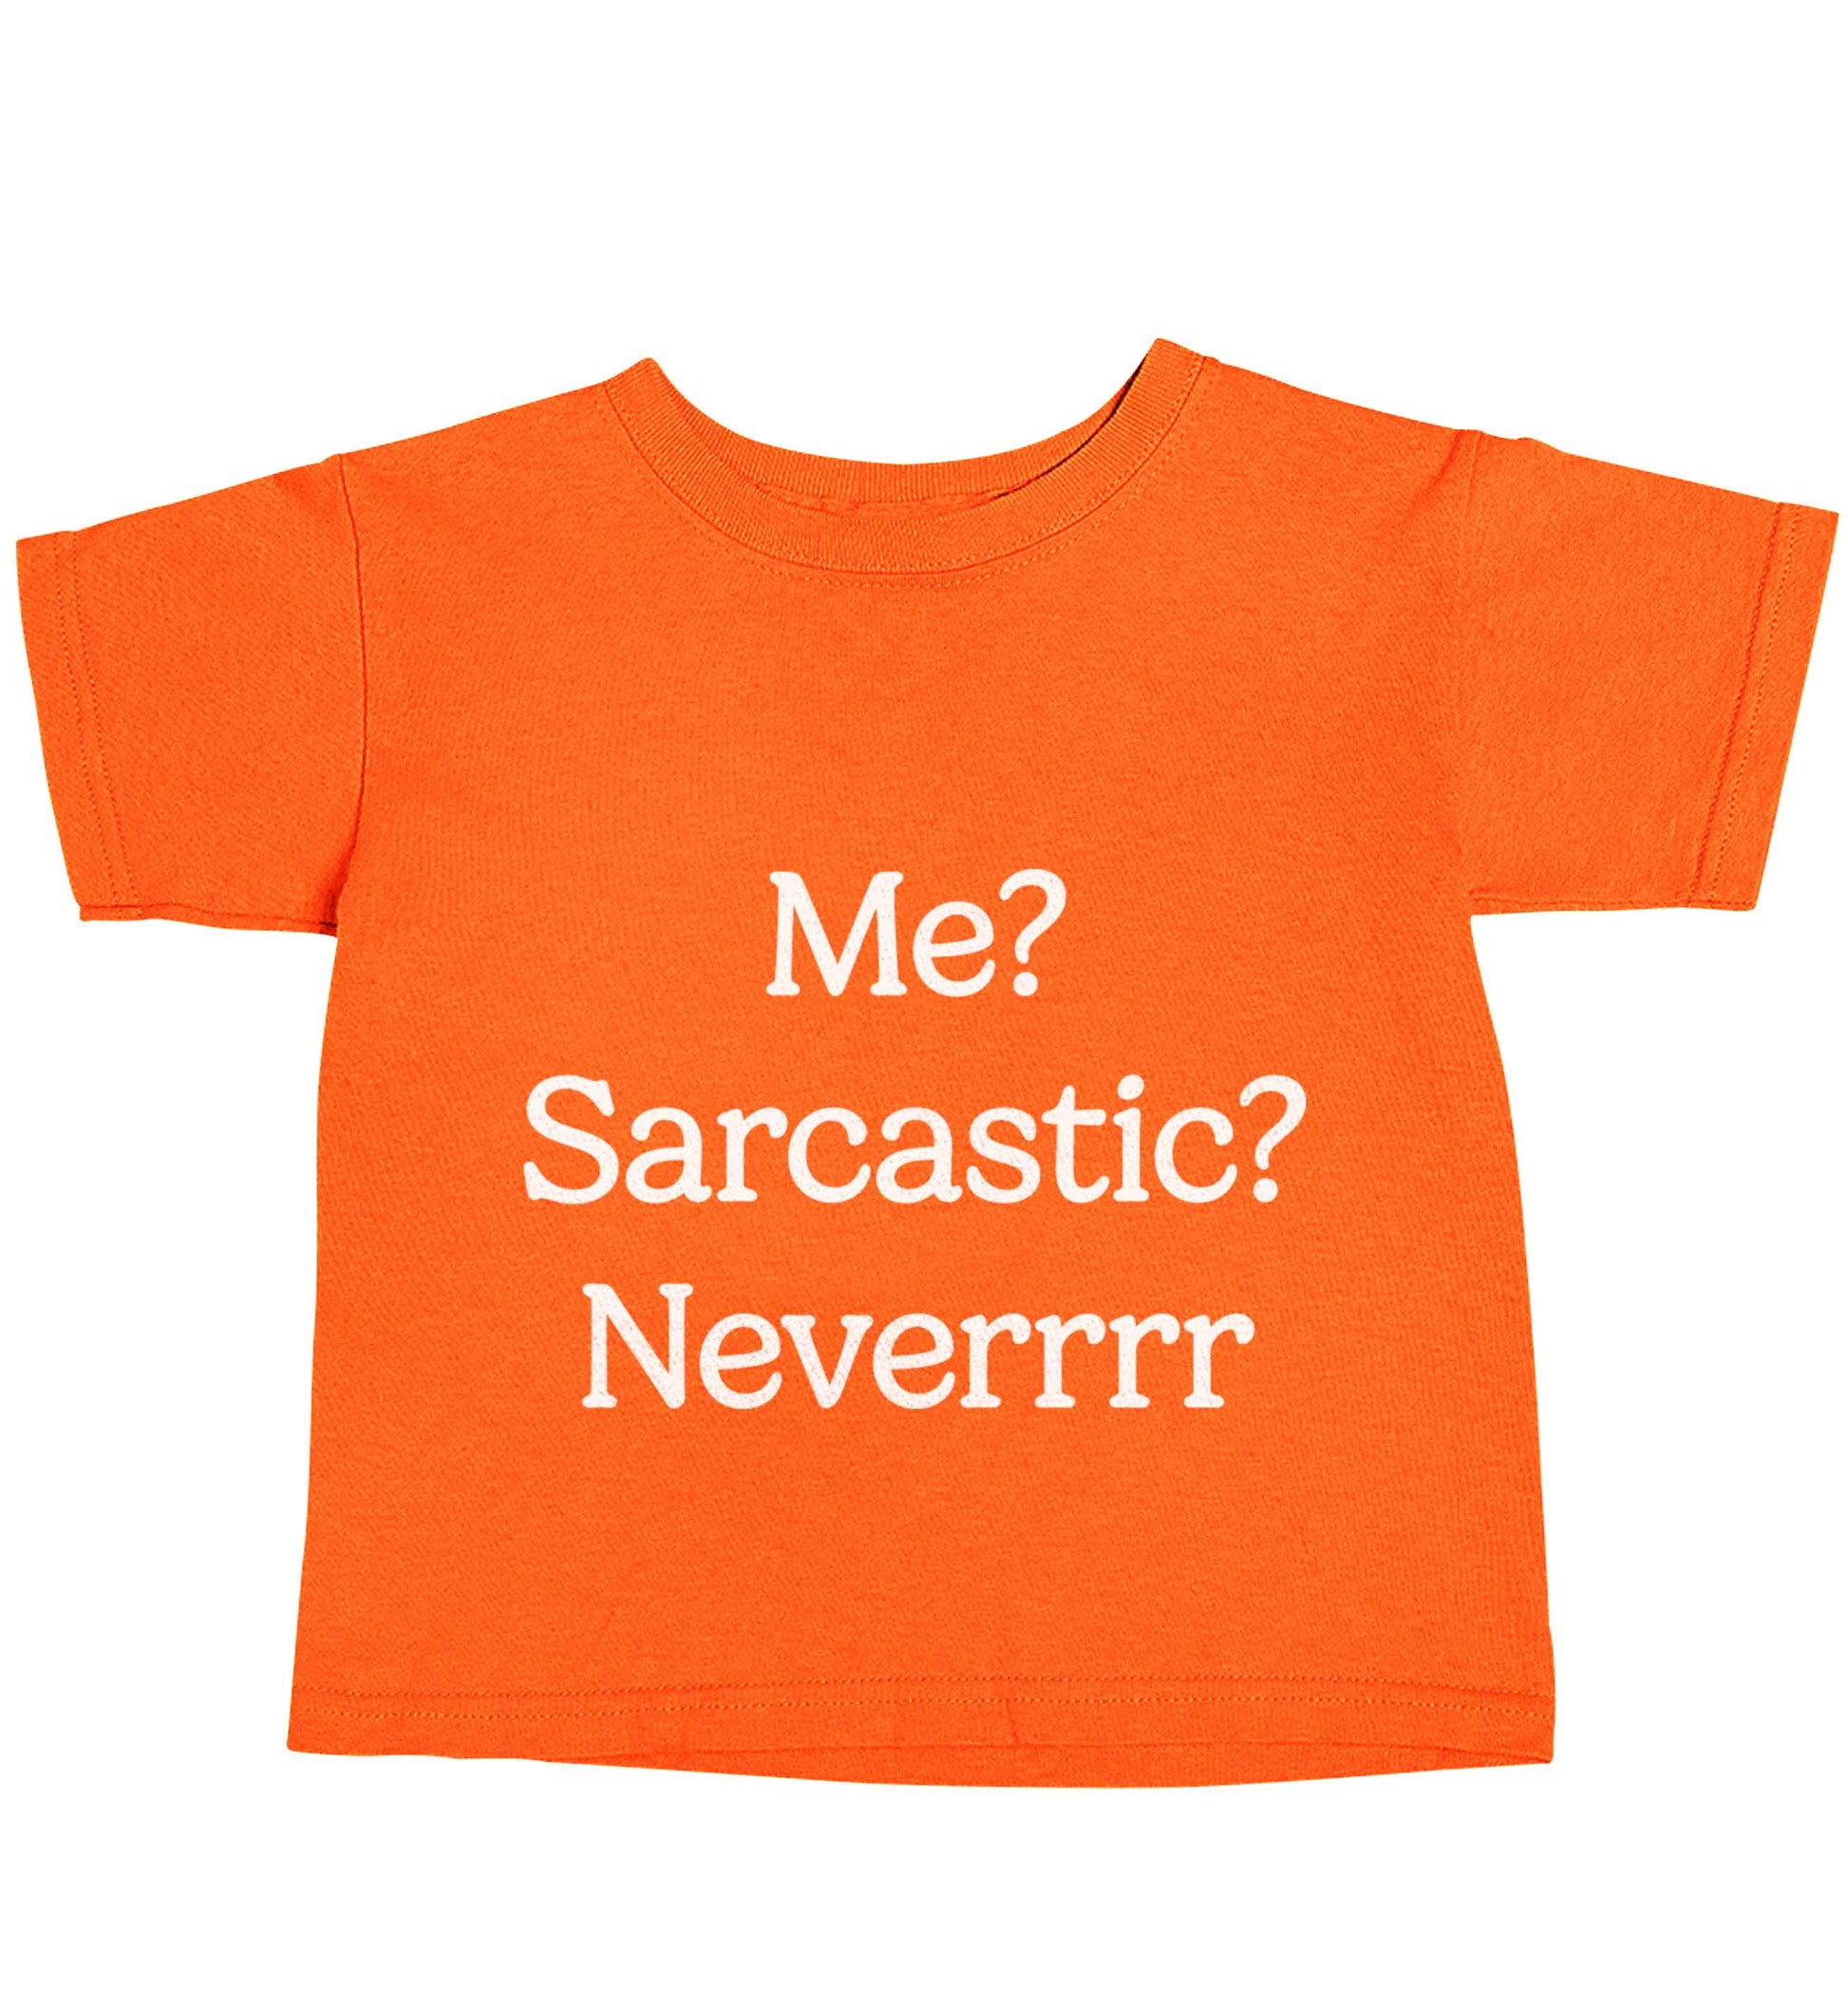 Me? sarcastic? never orange baby toddler Tshirt 2 Years